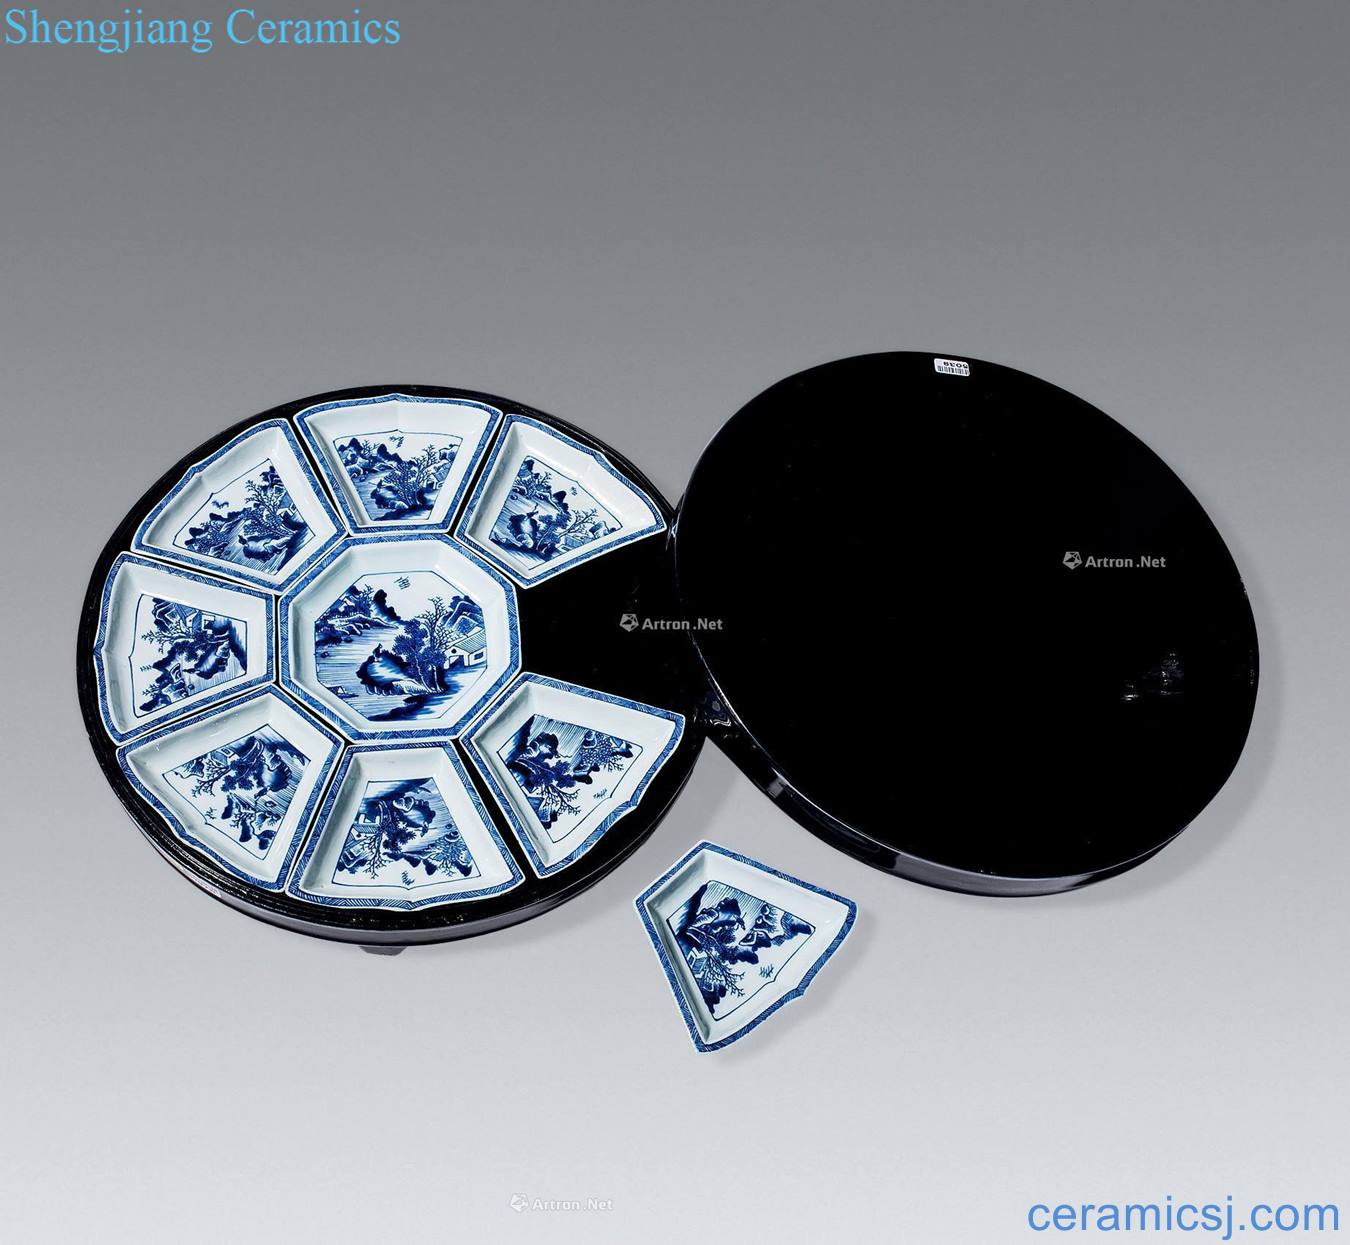 Emperor qianlong Blue and white landscape character nine sub plates